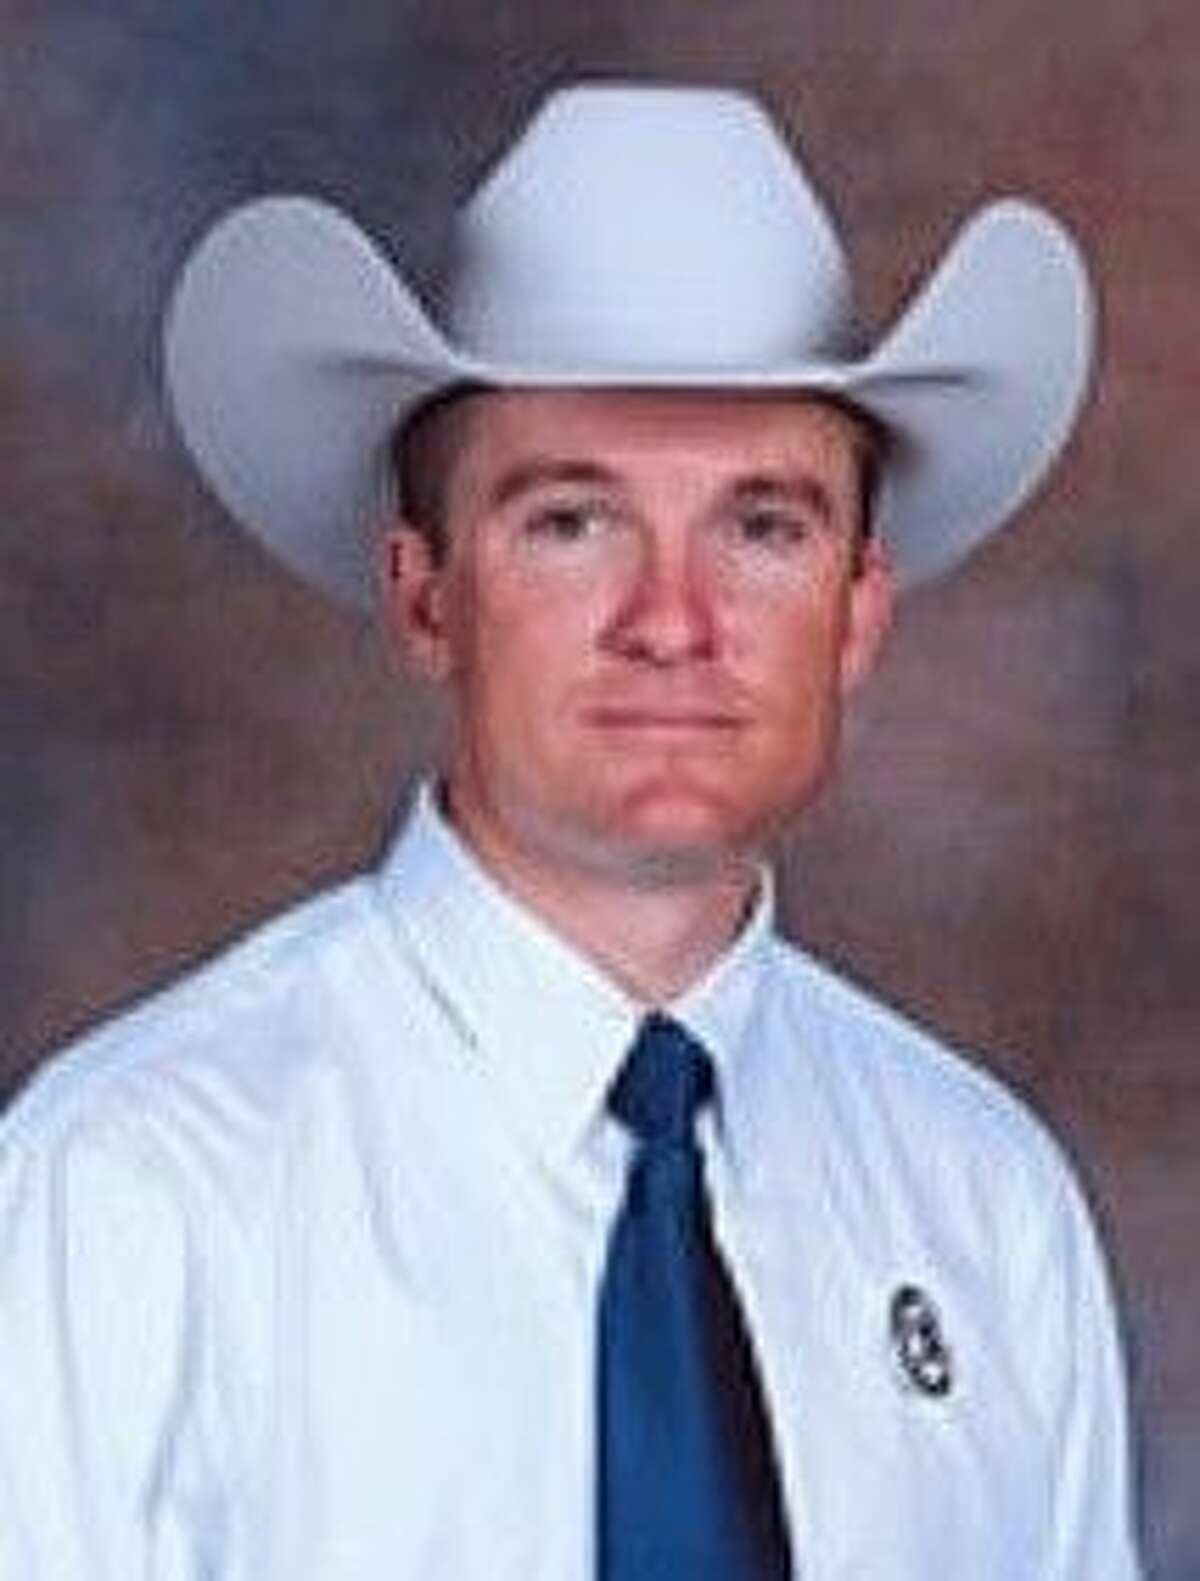 Texas Ranger Jake Burson